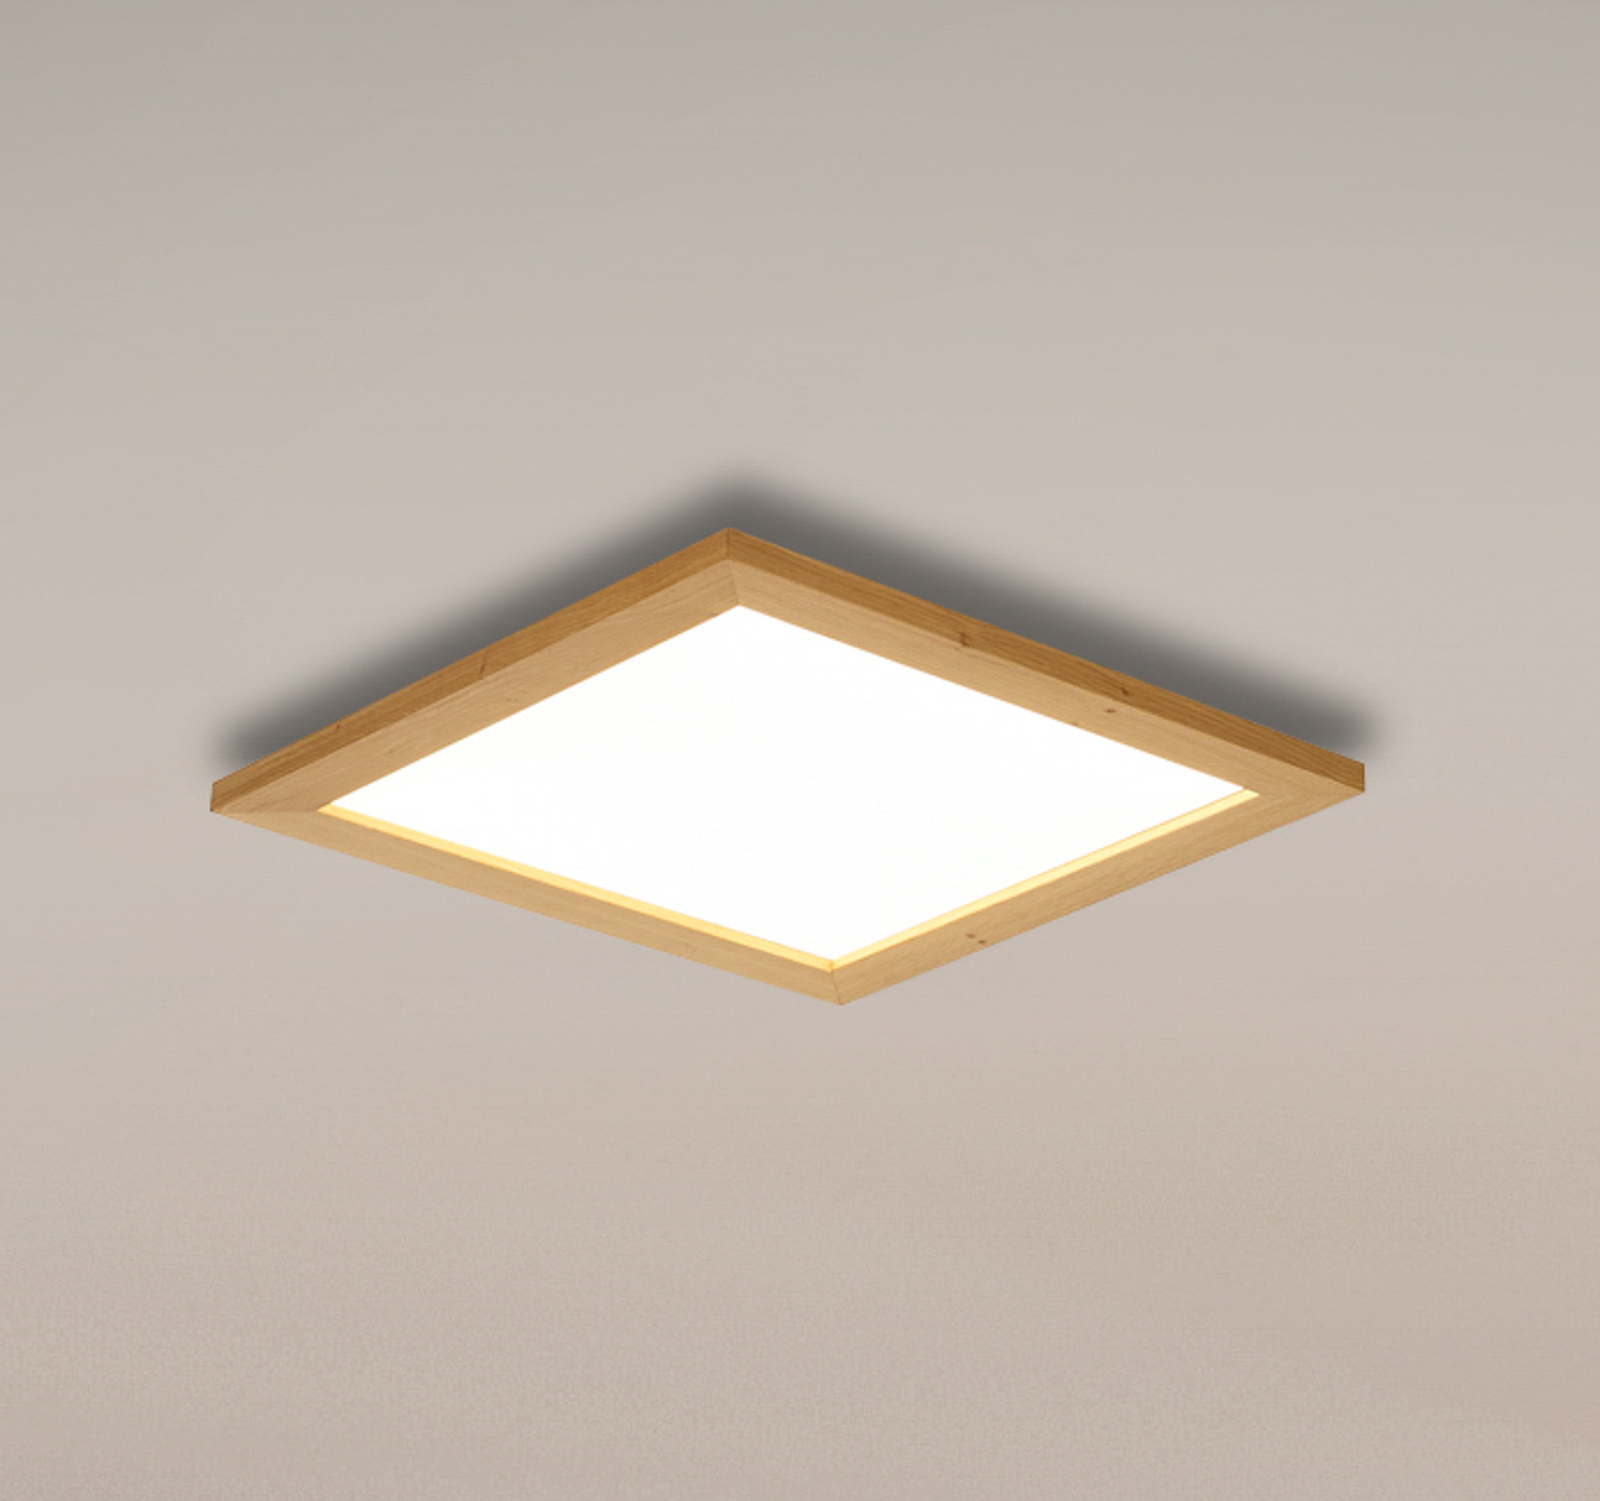 Lucande Aurinor LED-Panel Eiche natur 45 cm